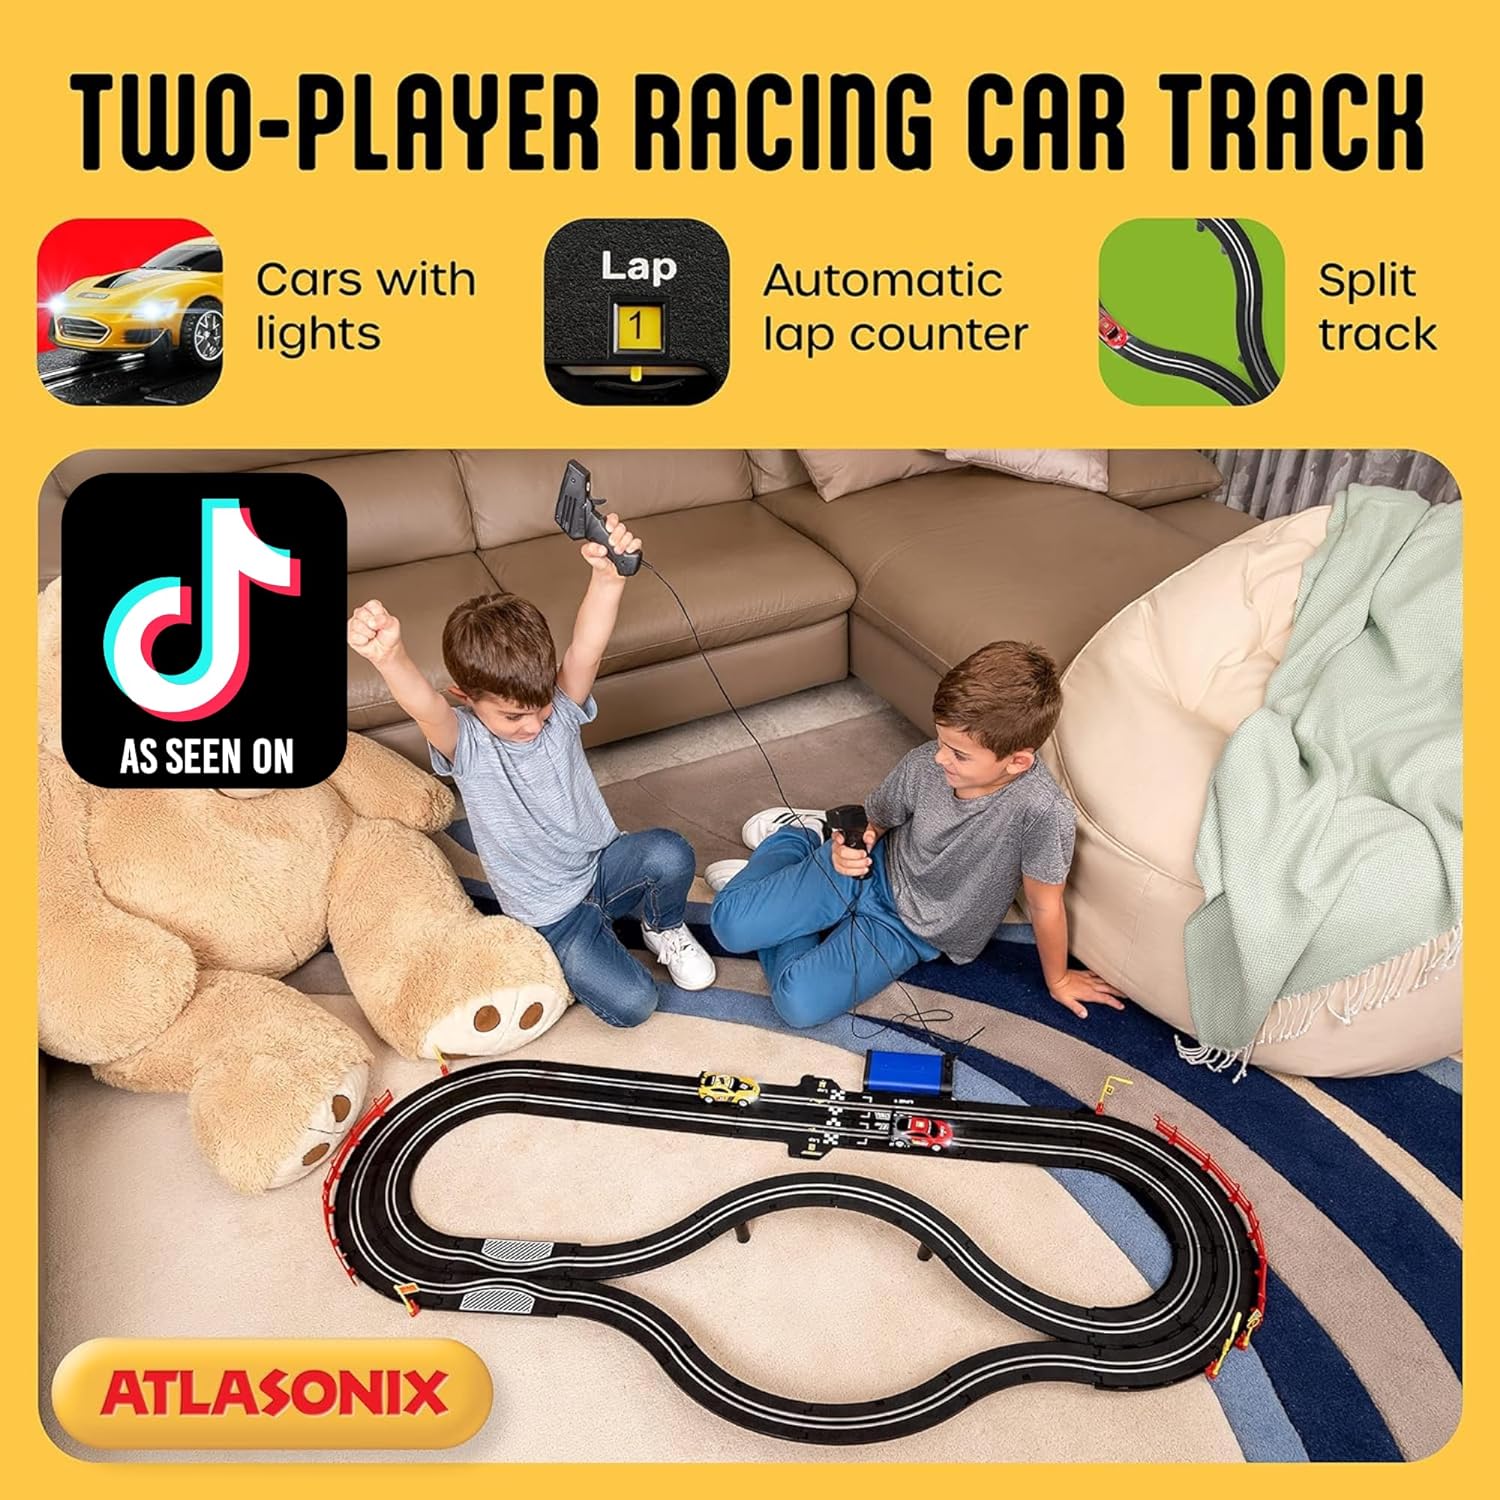 Atlasonix Slot Car Race Tracks Sets - Slot Cars, Electric Race Tracks & Accessories Electric Race Car Track, Dual Electric Race Track for Girls & Boys Age 8-12, 1:43 Scale